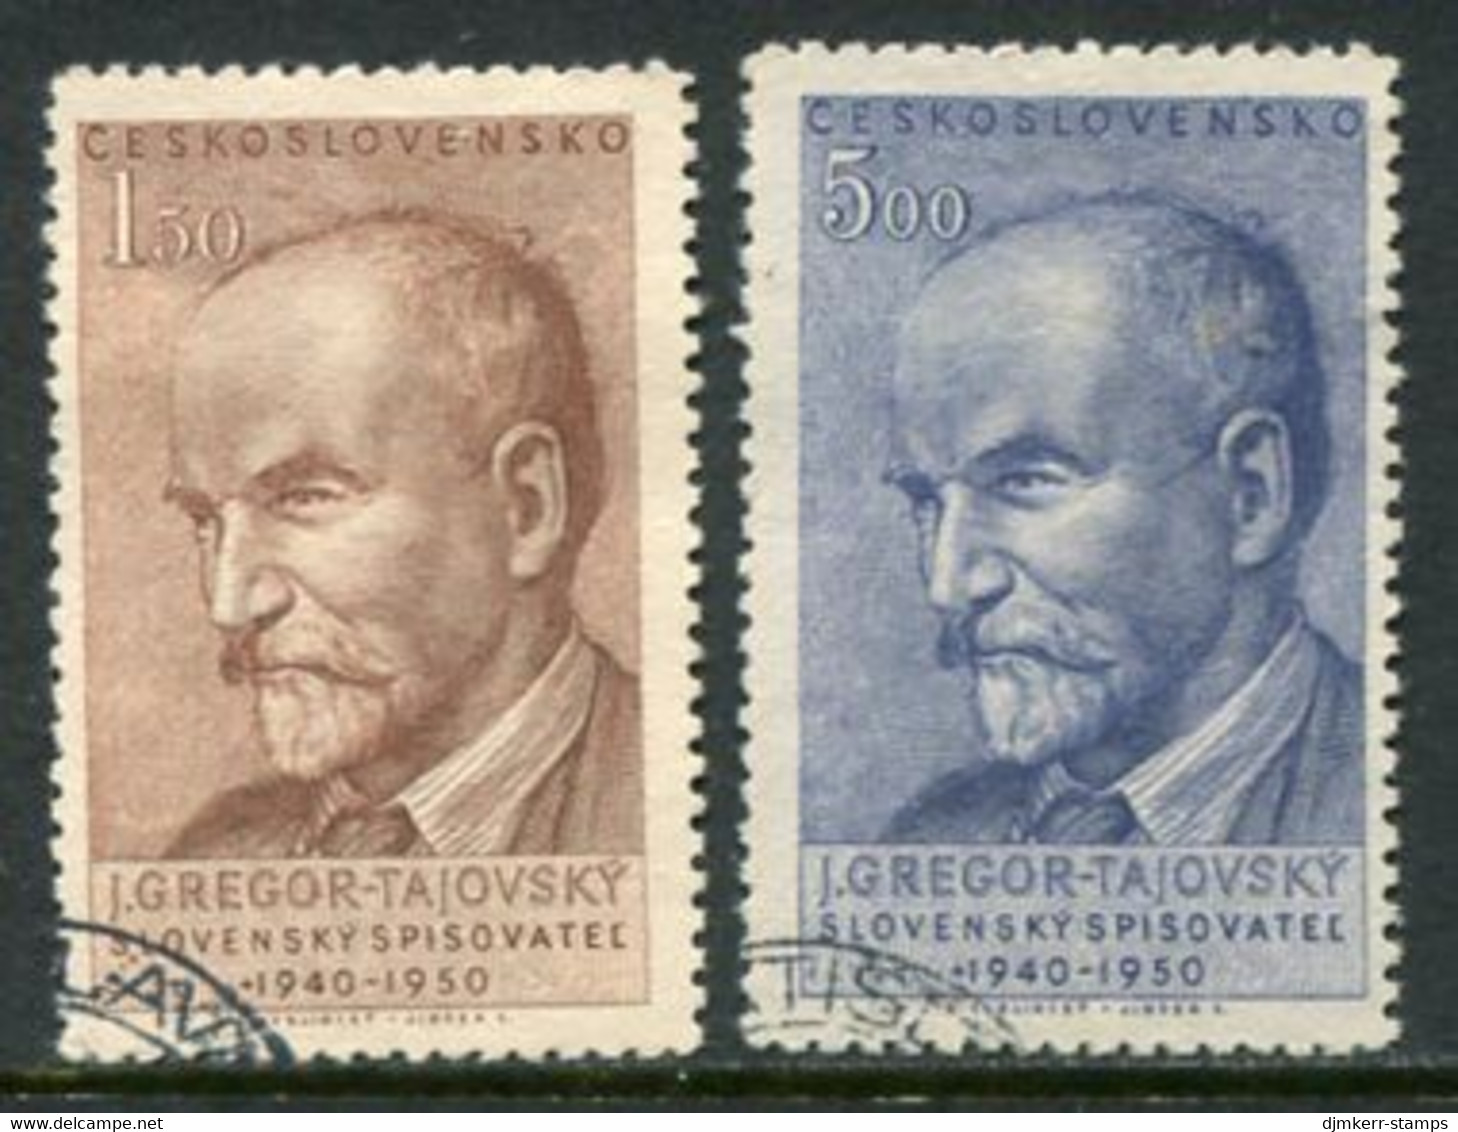 CZECHOSLOVAKIA 1950 Gregor-Tajovsky  Used.  Michel 636-37 - Used Stamps